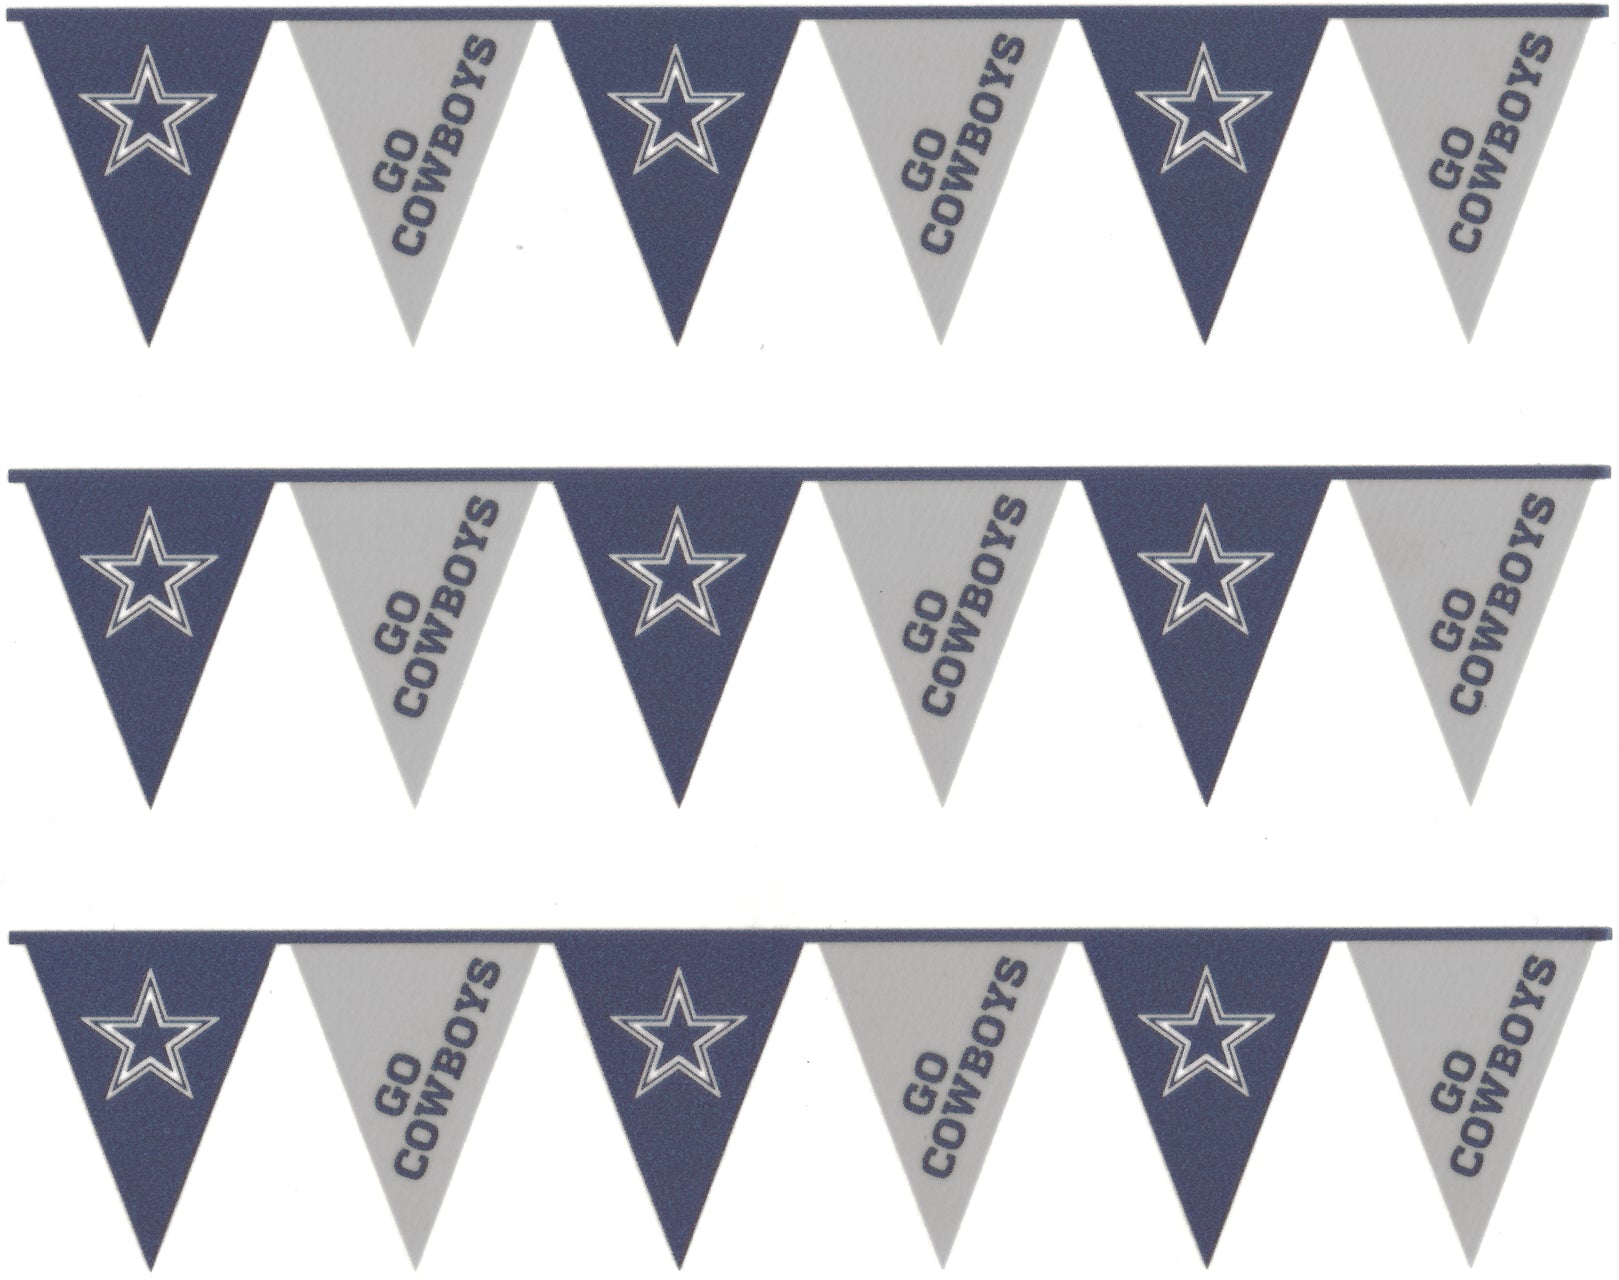 Dallas Cowboys Logo Football NFL Pennants Edible Cake Topper Image Strips ABPID07917